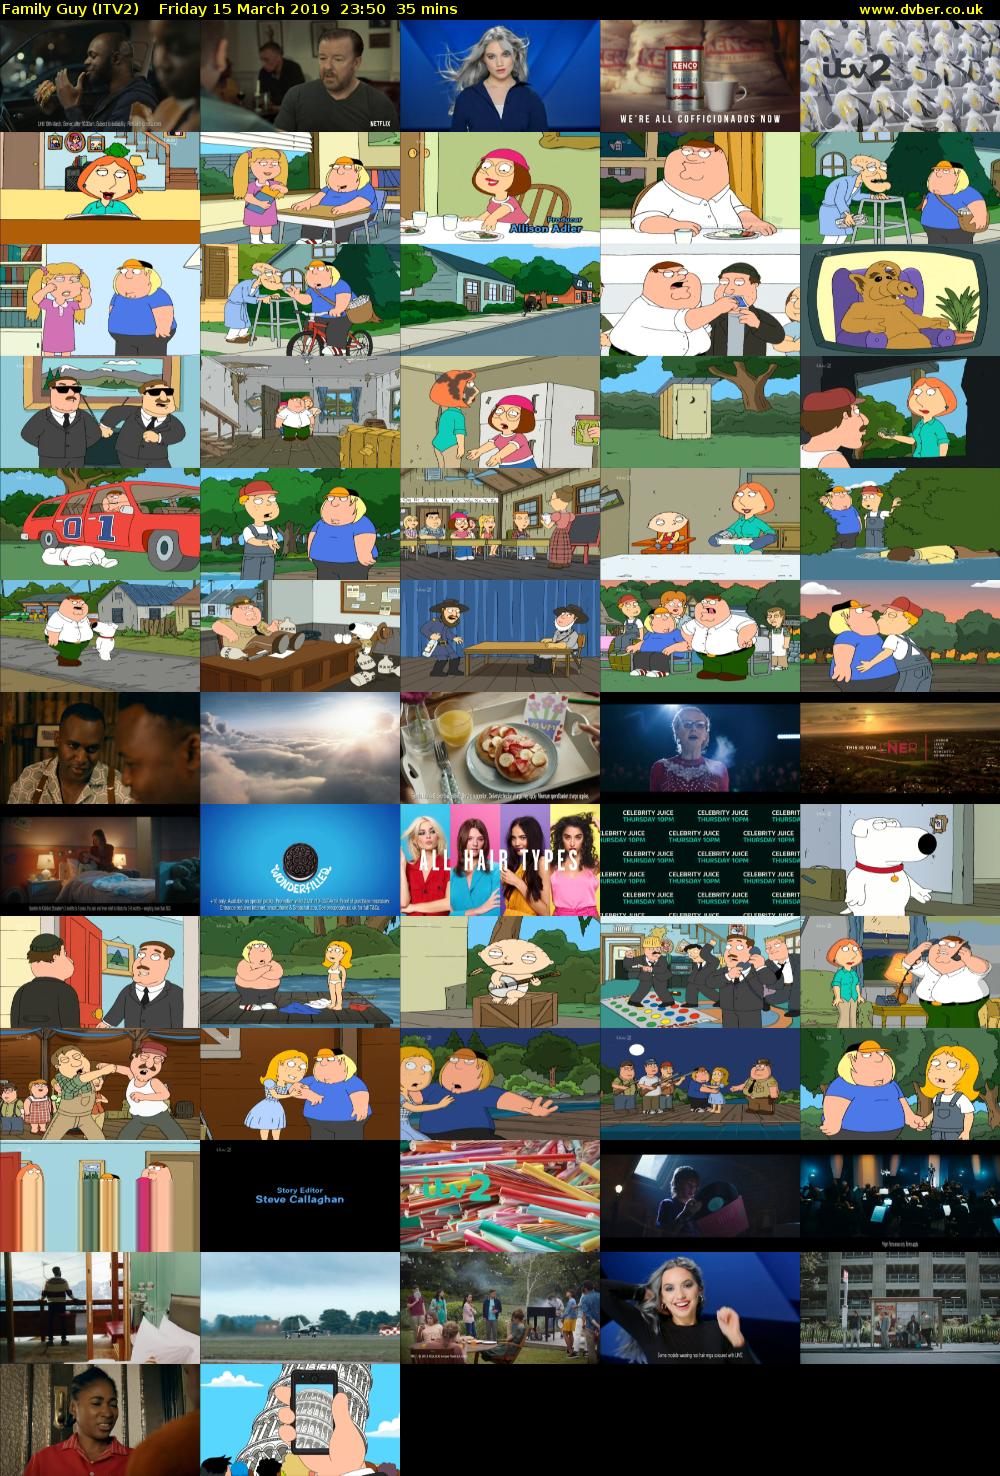 Family Guy (ITV2) Friday 15 March 2019 23:50 - 00:25